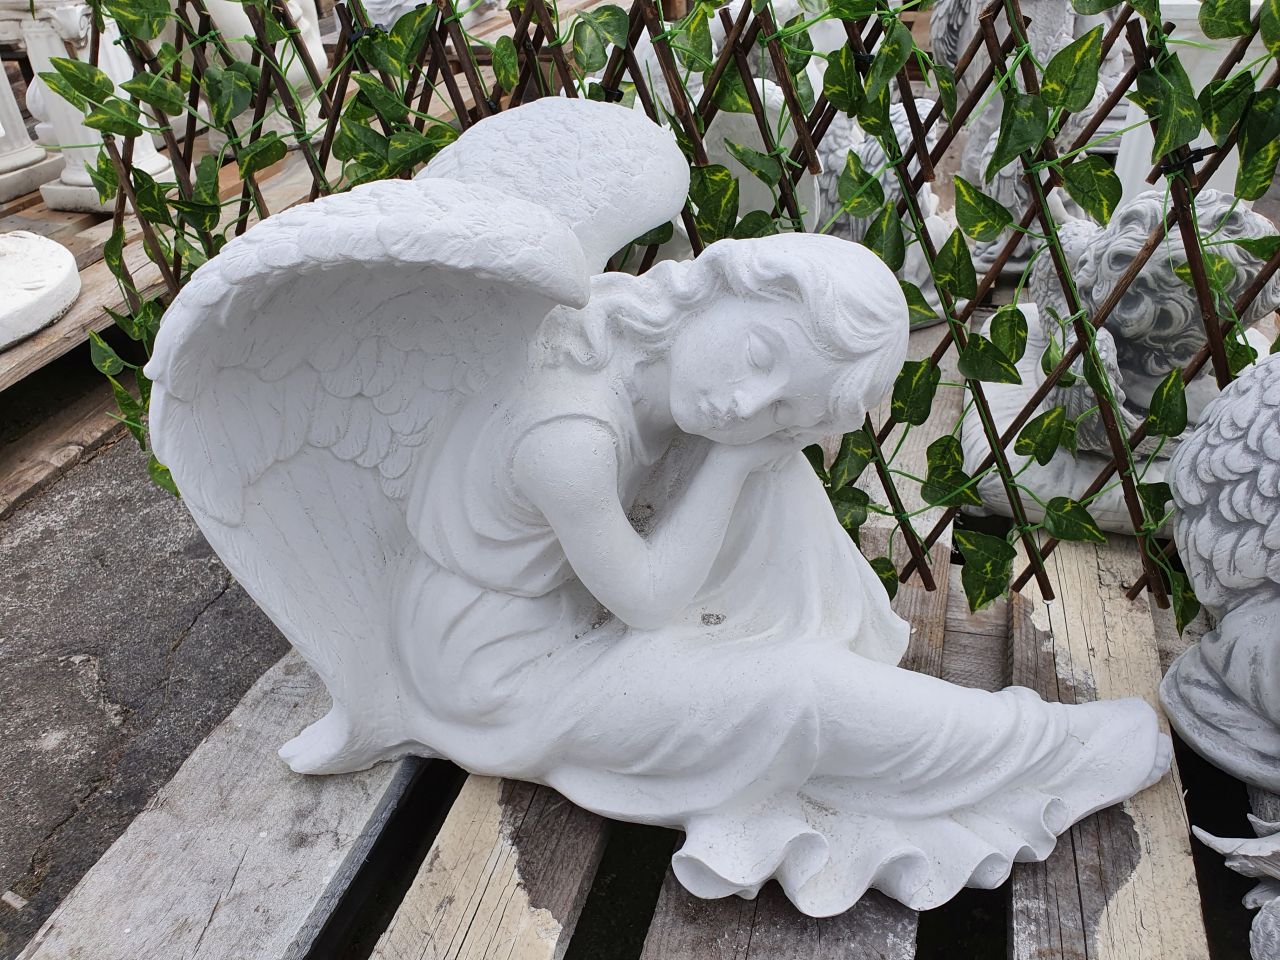 -Gartenfigur Engel an Knie angelehnt- weiss- unter Statuen/Skulpturen Engel